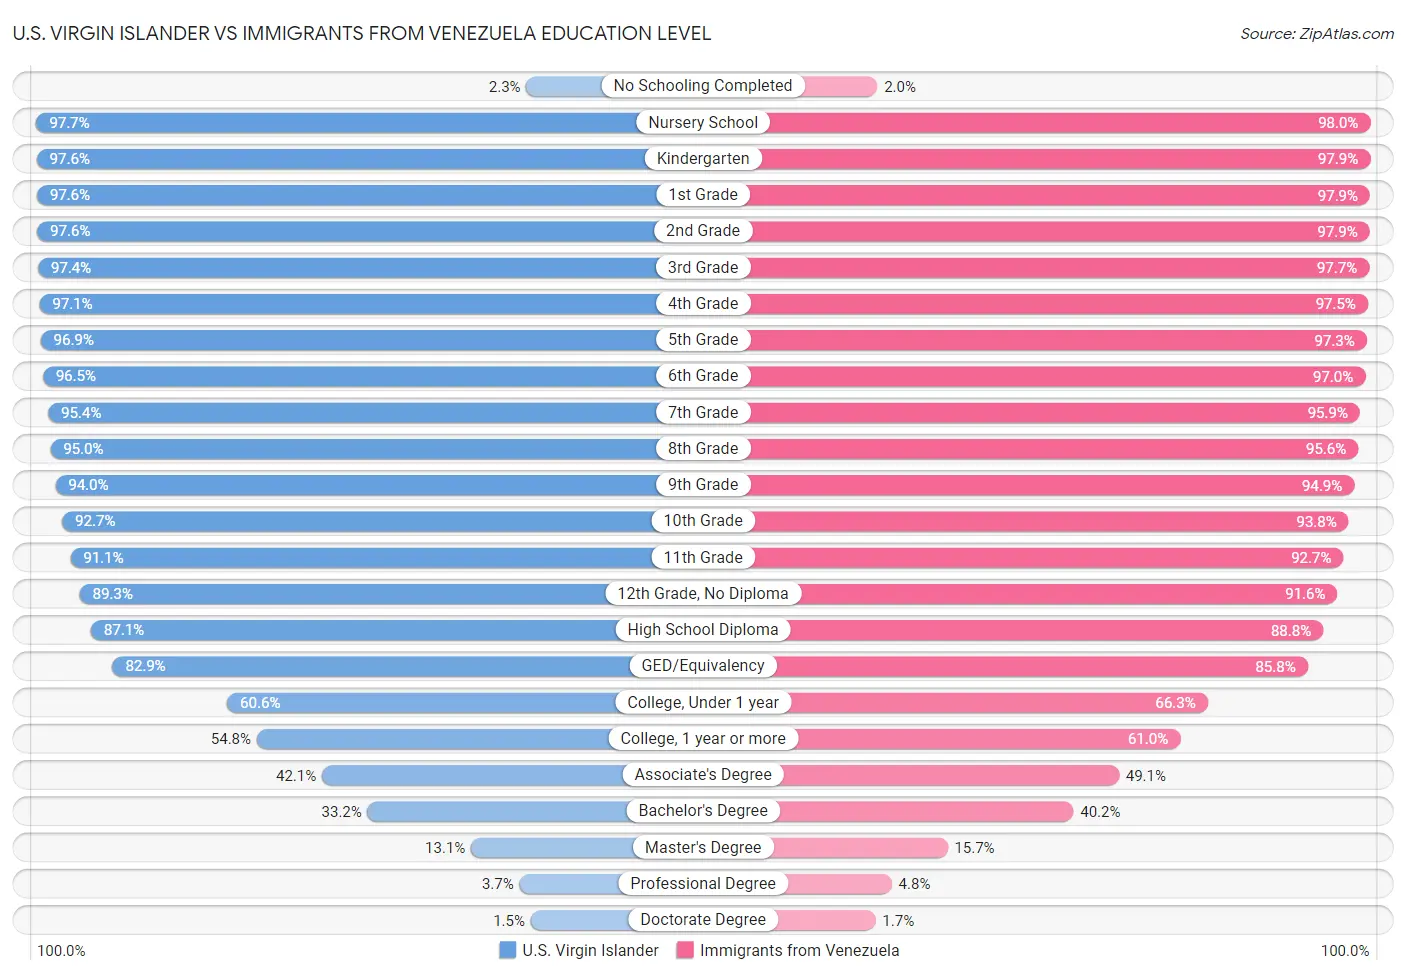 U.S. Virgin Islander vs Immigrants from Venezuela Education Level